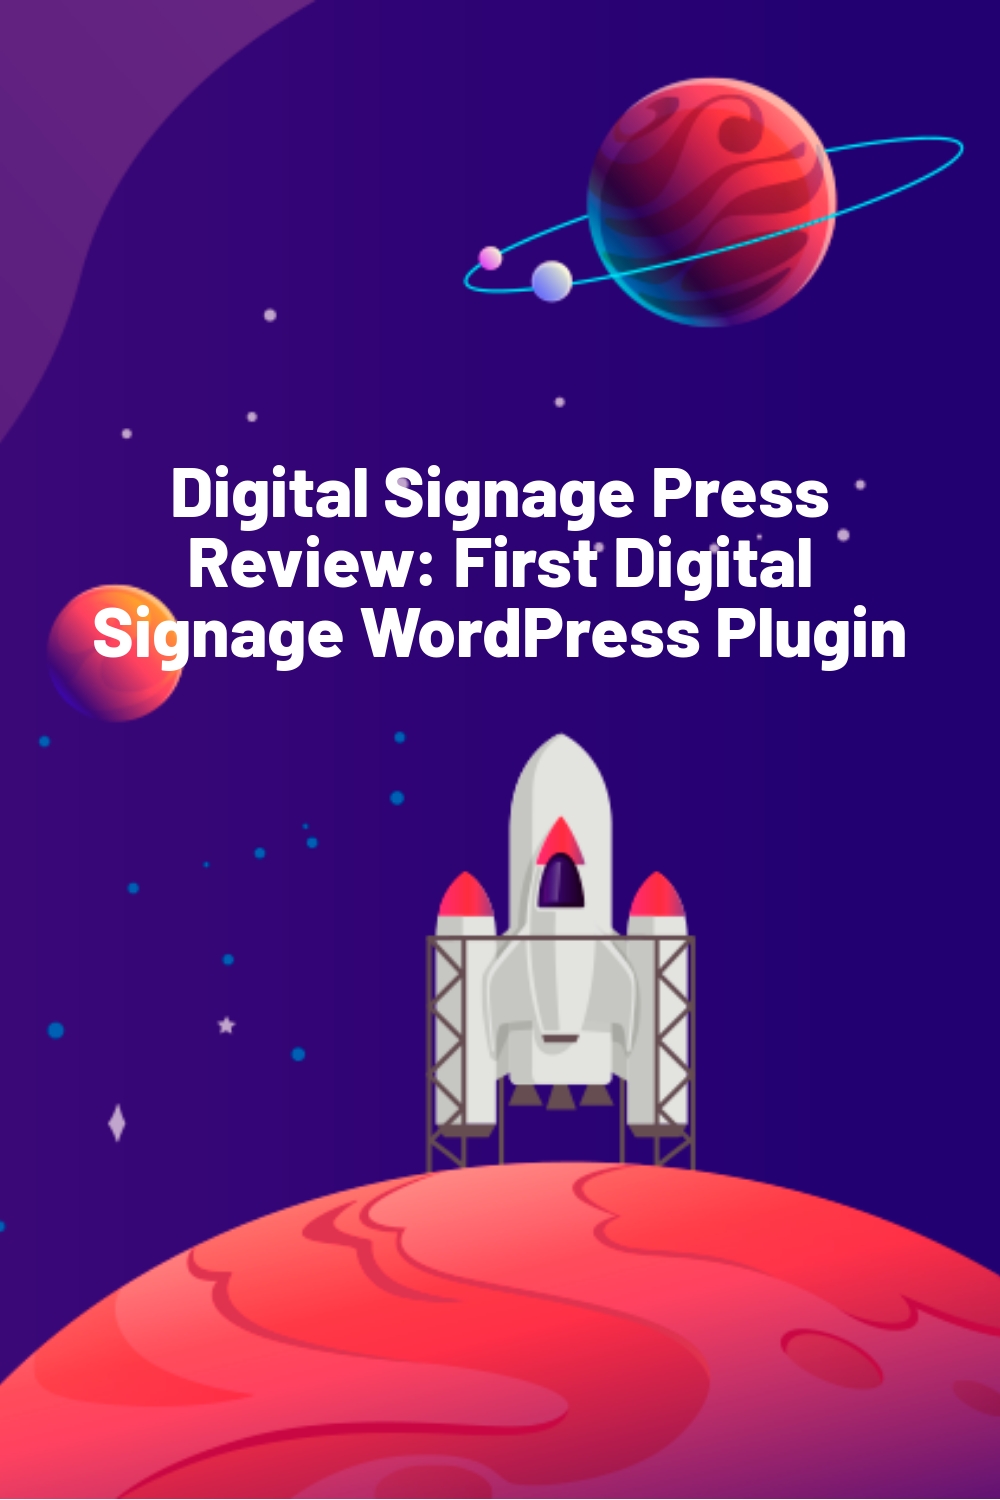 Digital Signage Press Review: First Digital Signage WordPress Plugin